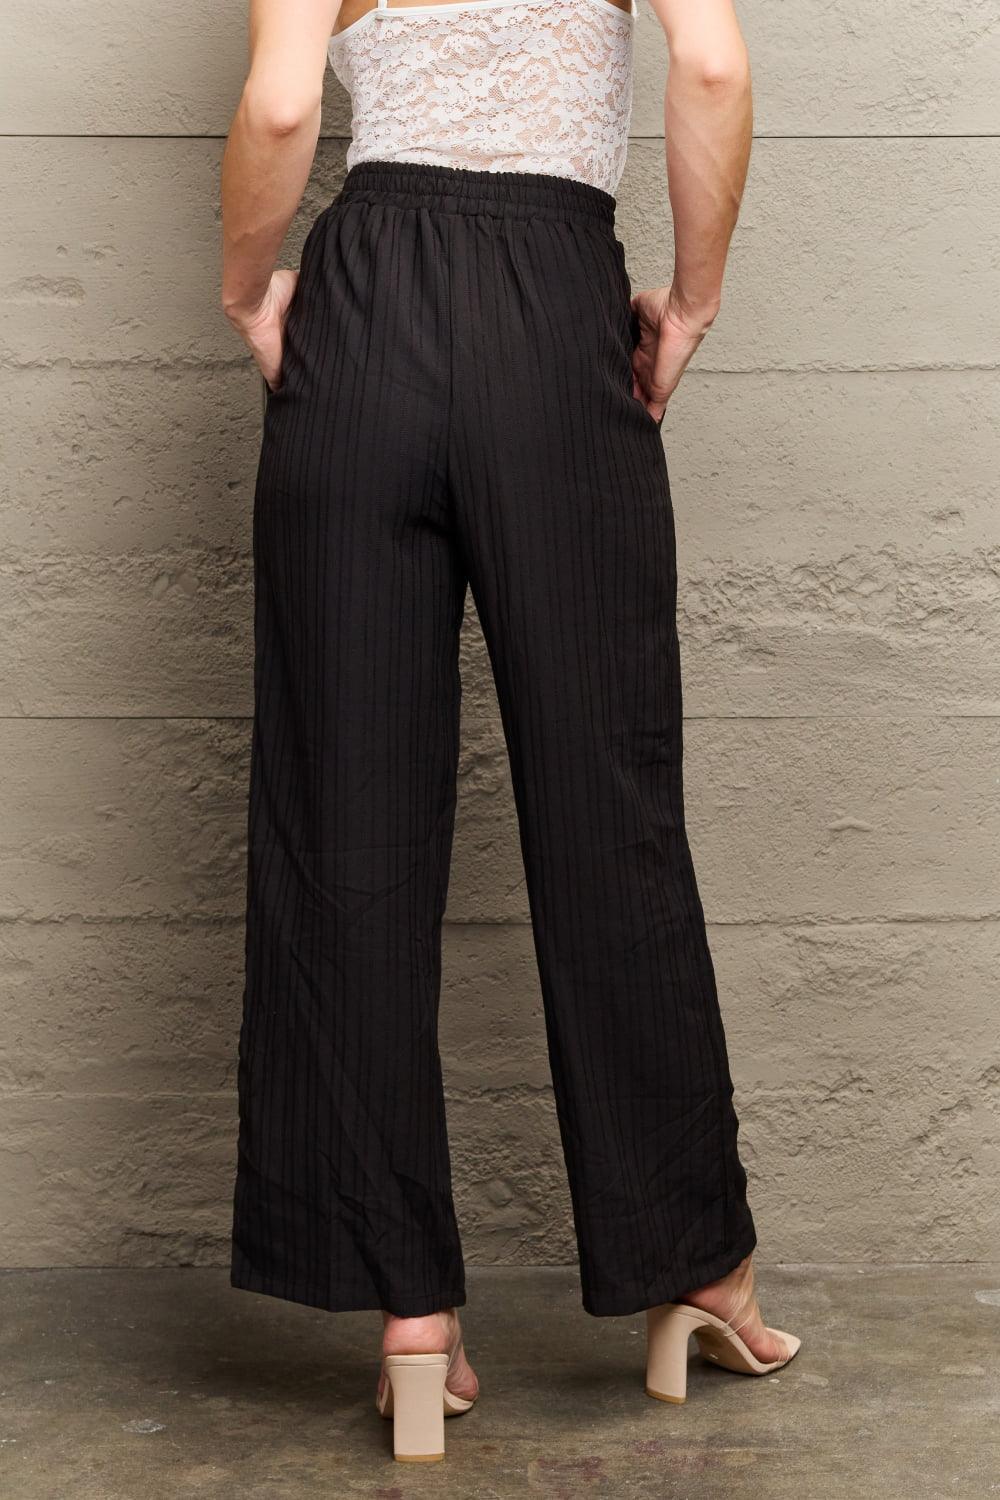 Poised Tie Waist Black Pants With Pockets - MXSTUDIO.COM